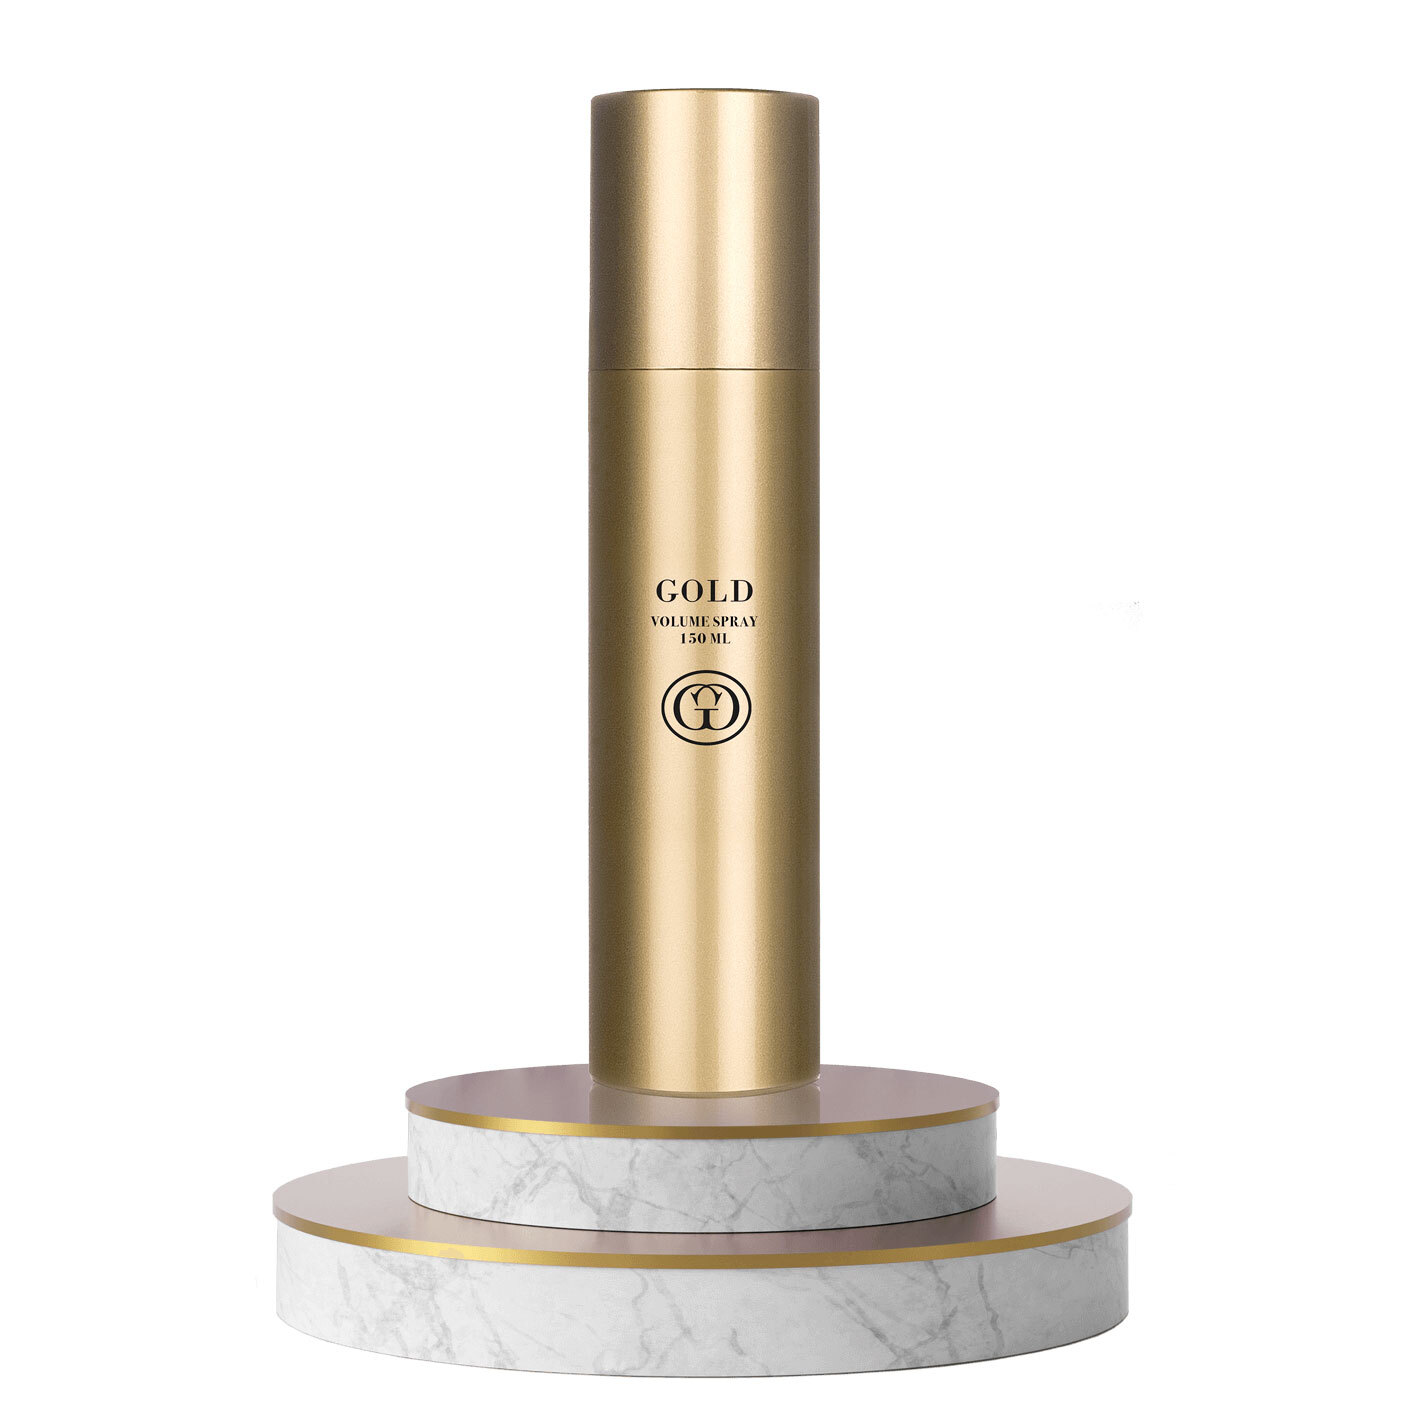 Gold Professional Styling: Volume Spray 150mL